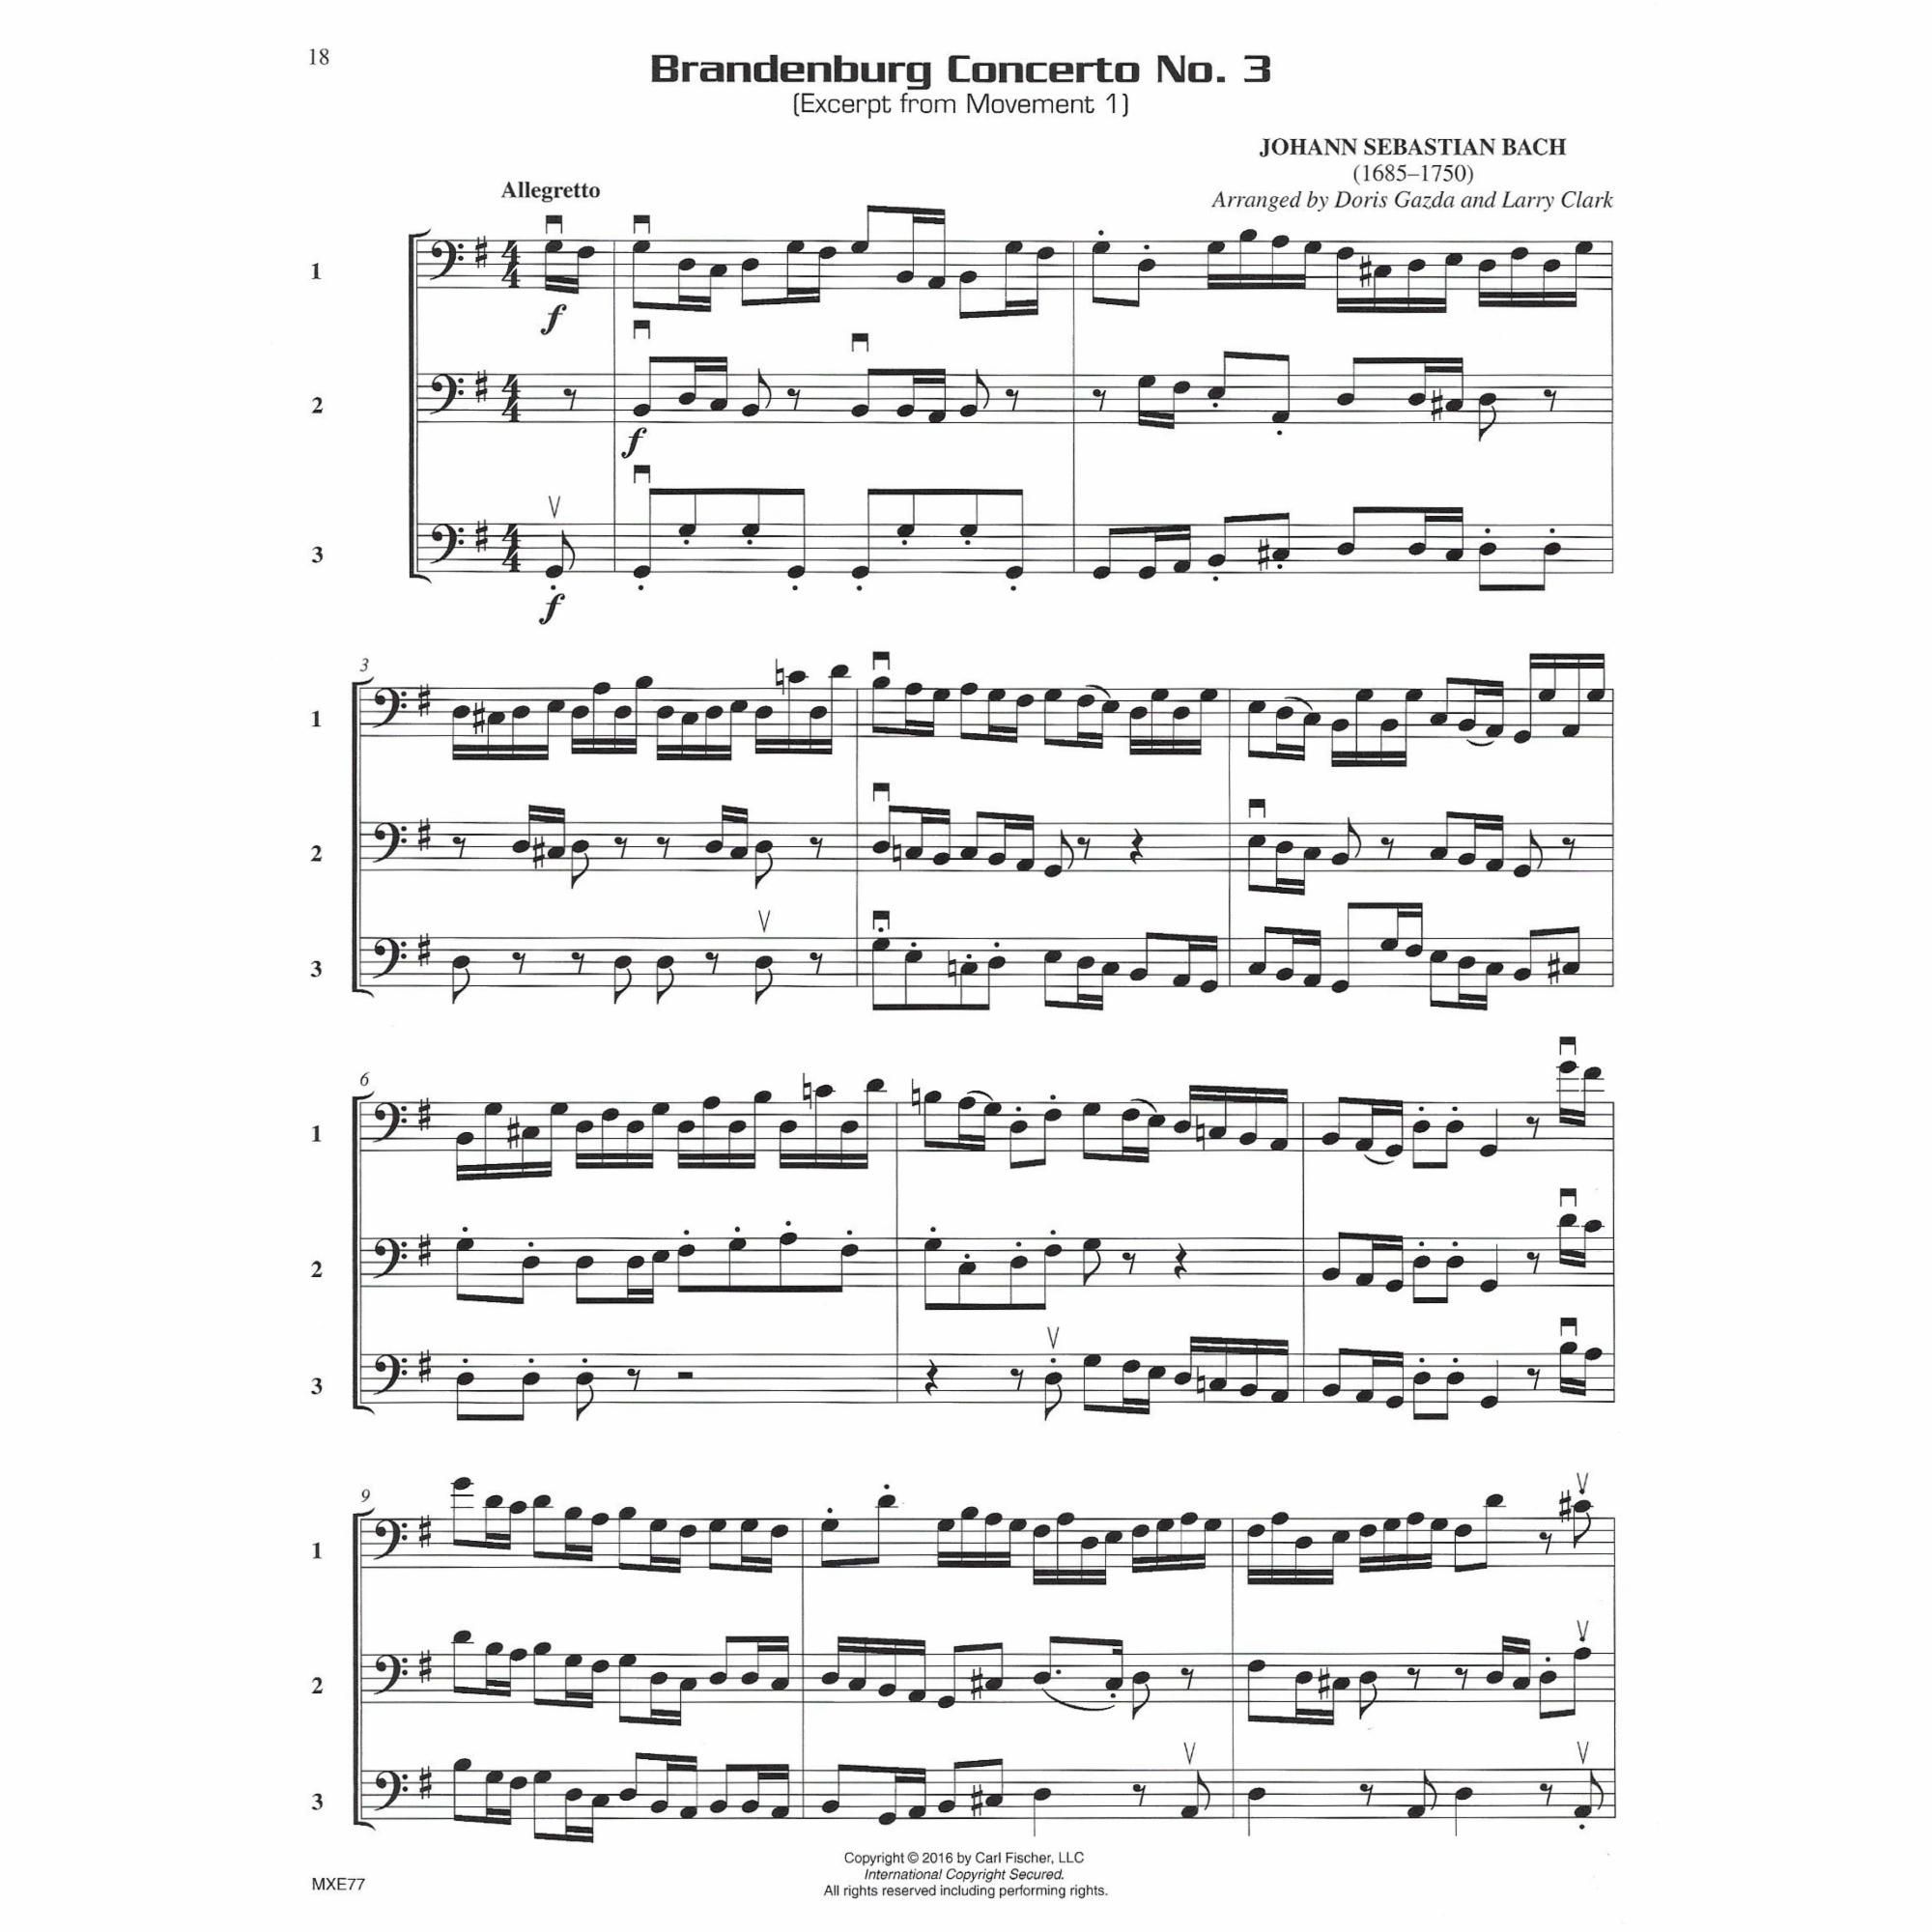 Sample: Three Cellos (Pg. 18)